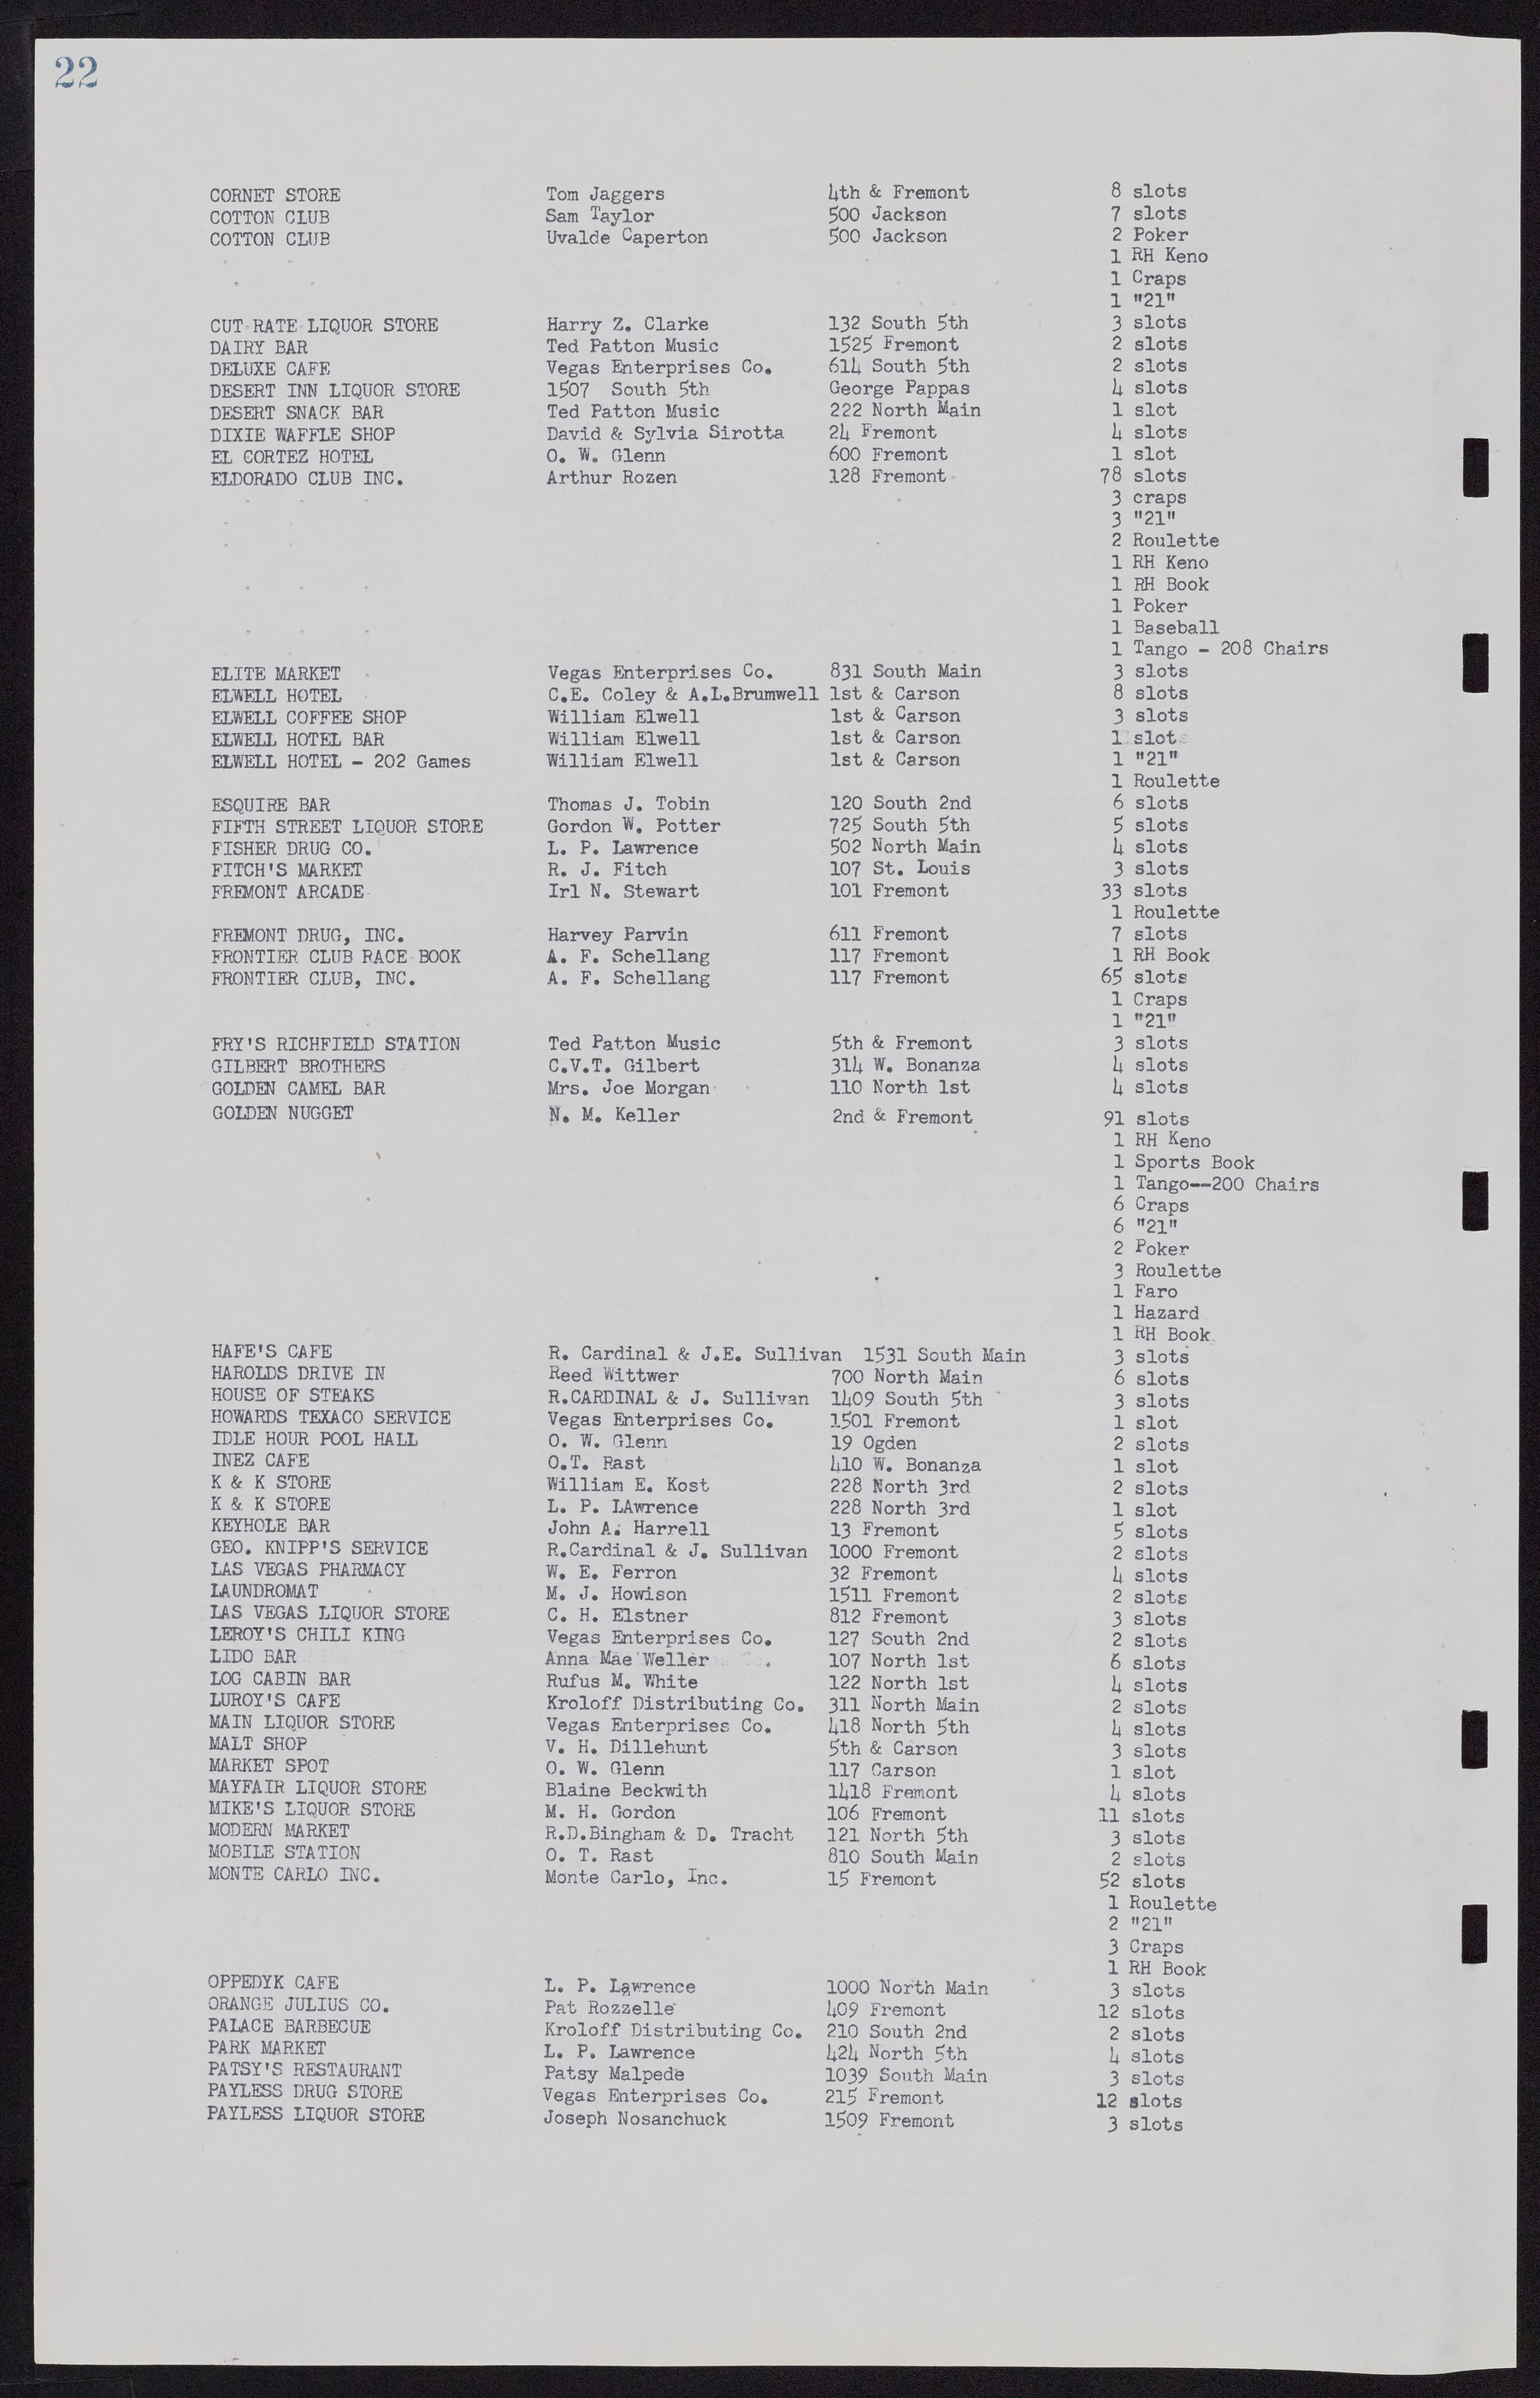 Las Vegas City Commission Minutes, November 7, 1949 to May 21, 1952, lvc000007-28